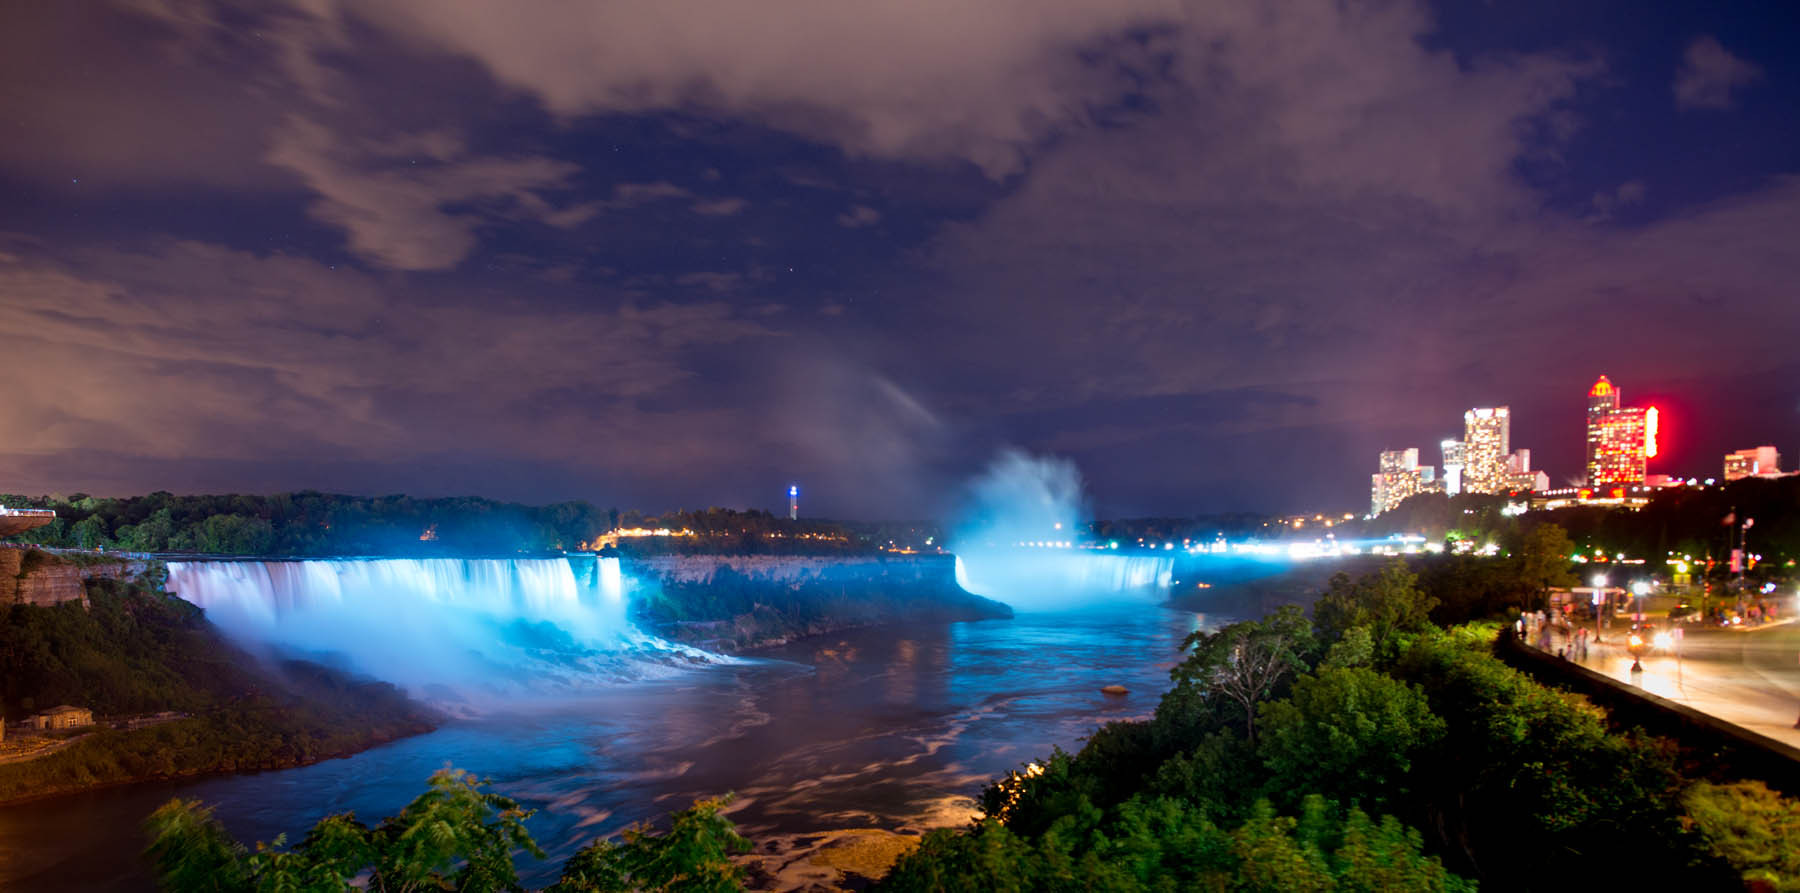 Niagara Falls at Night 11 HD Wallpaper